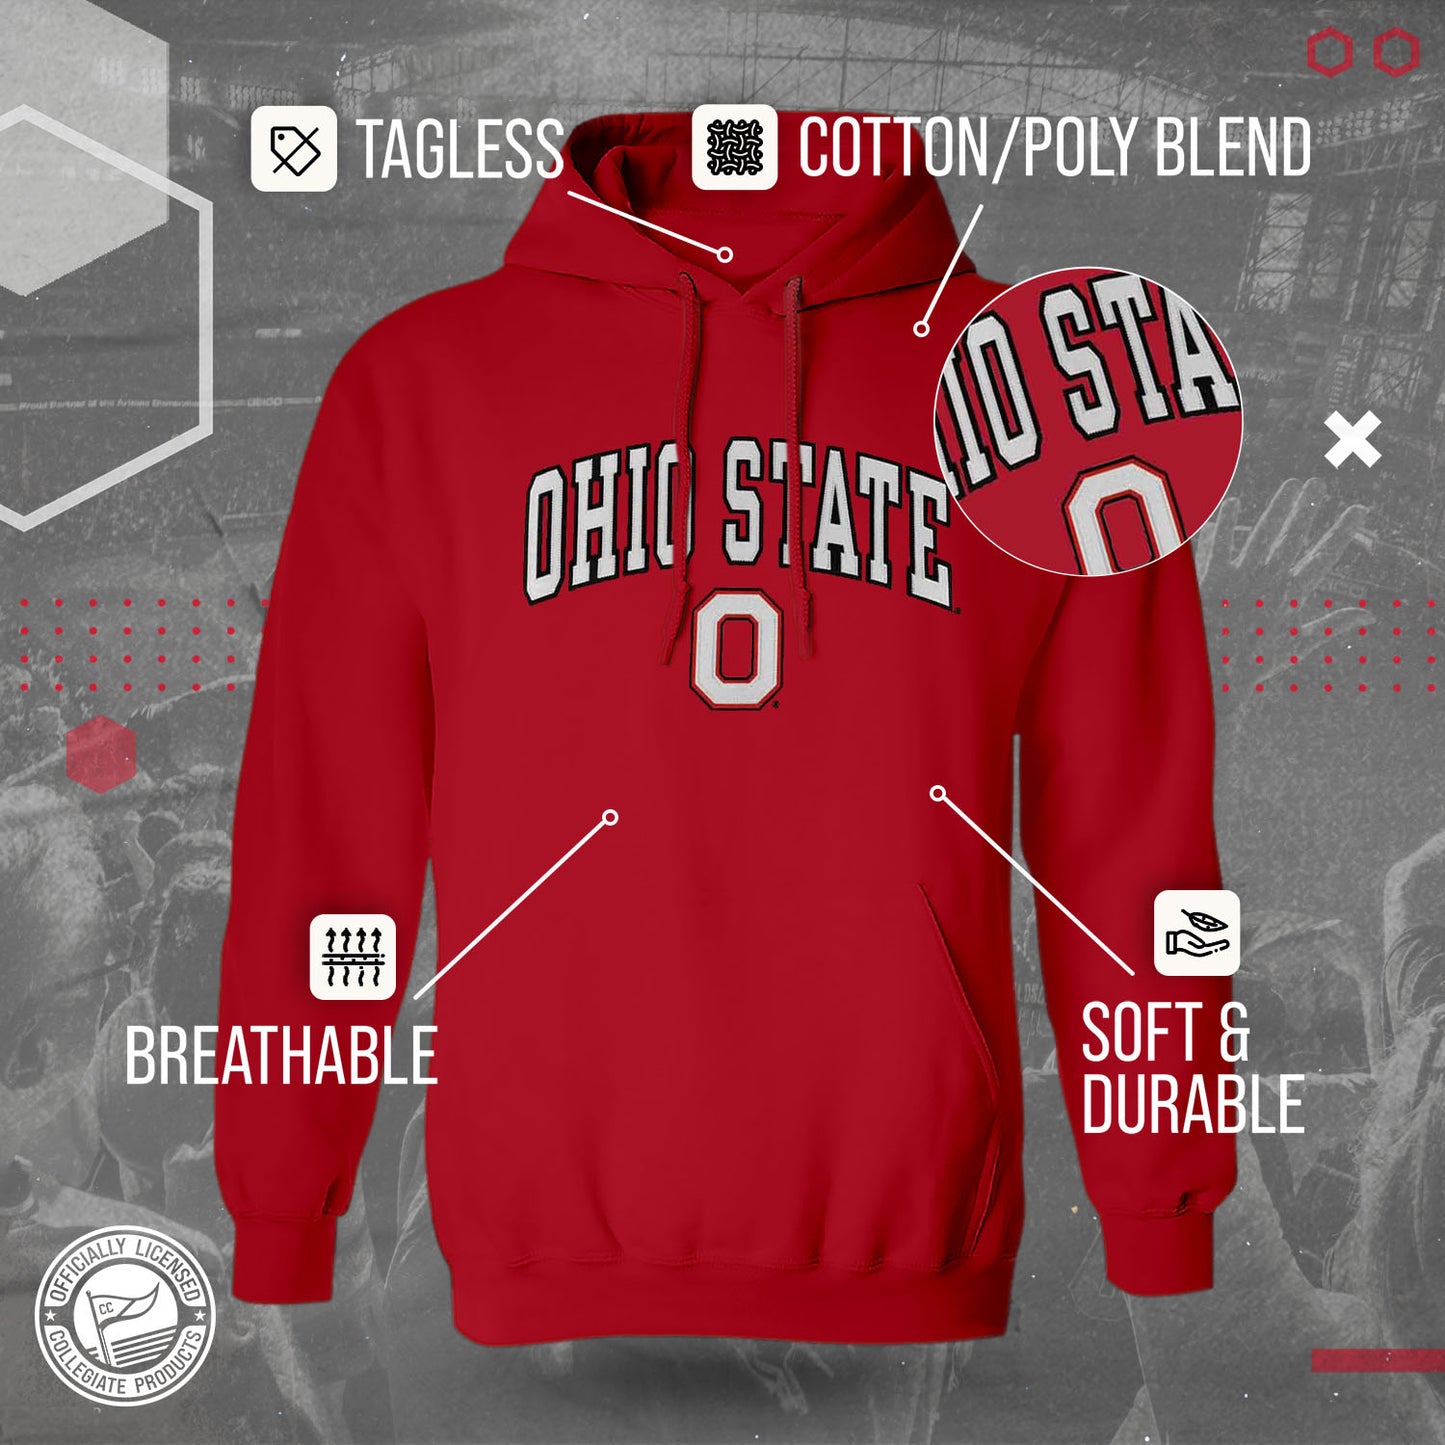 Ohio State Buckeyes NCAA Adult Tackle Twill Hooded Sweatshirt - Red